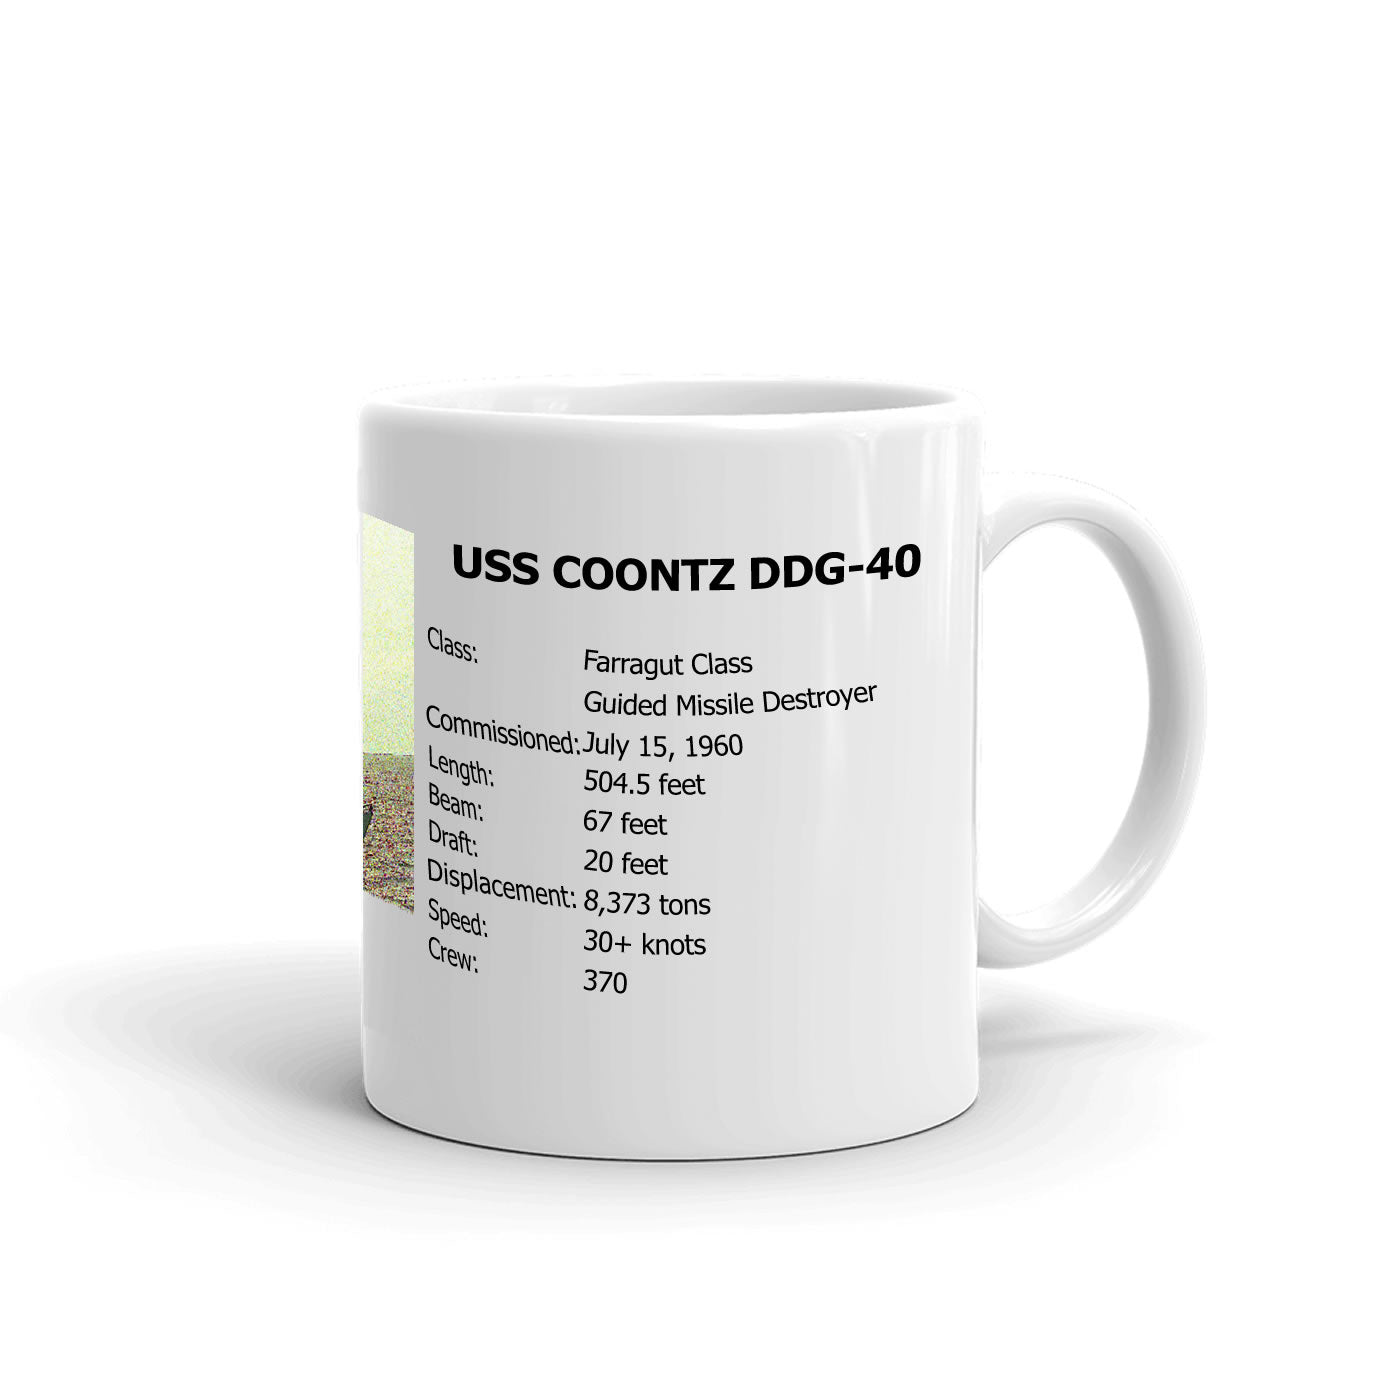 USS Coontz DDG-40 Coffee Cup Mug Right Handle